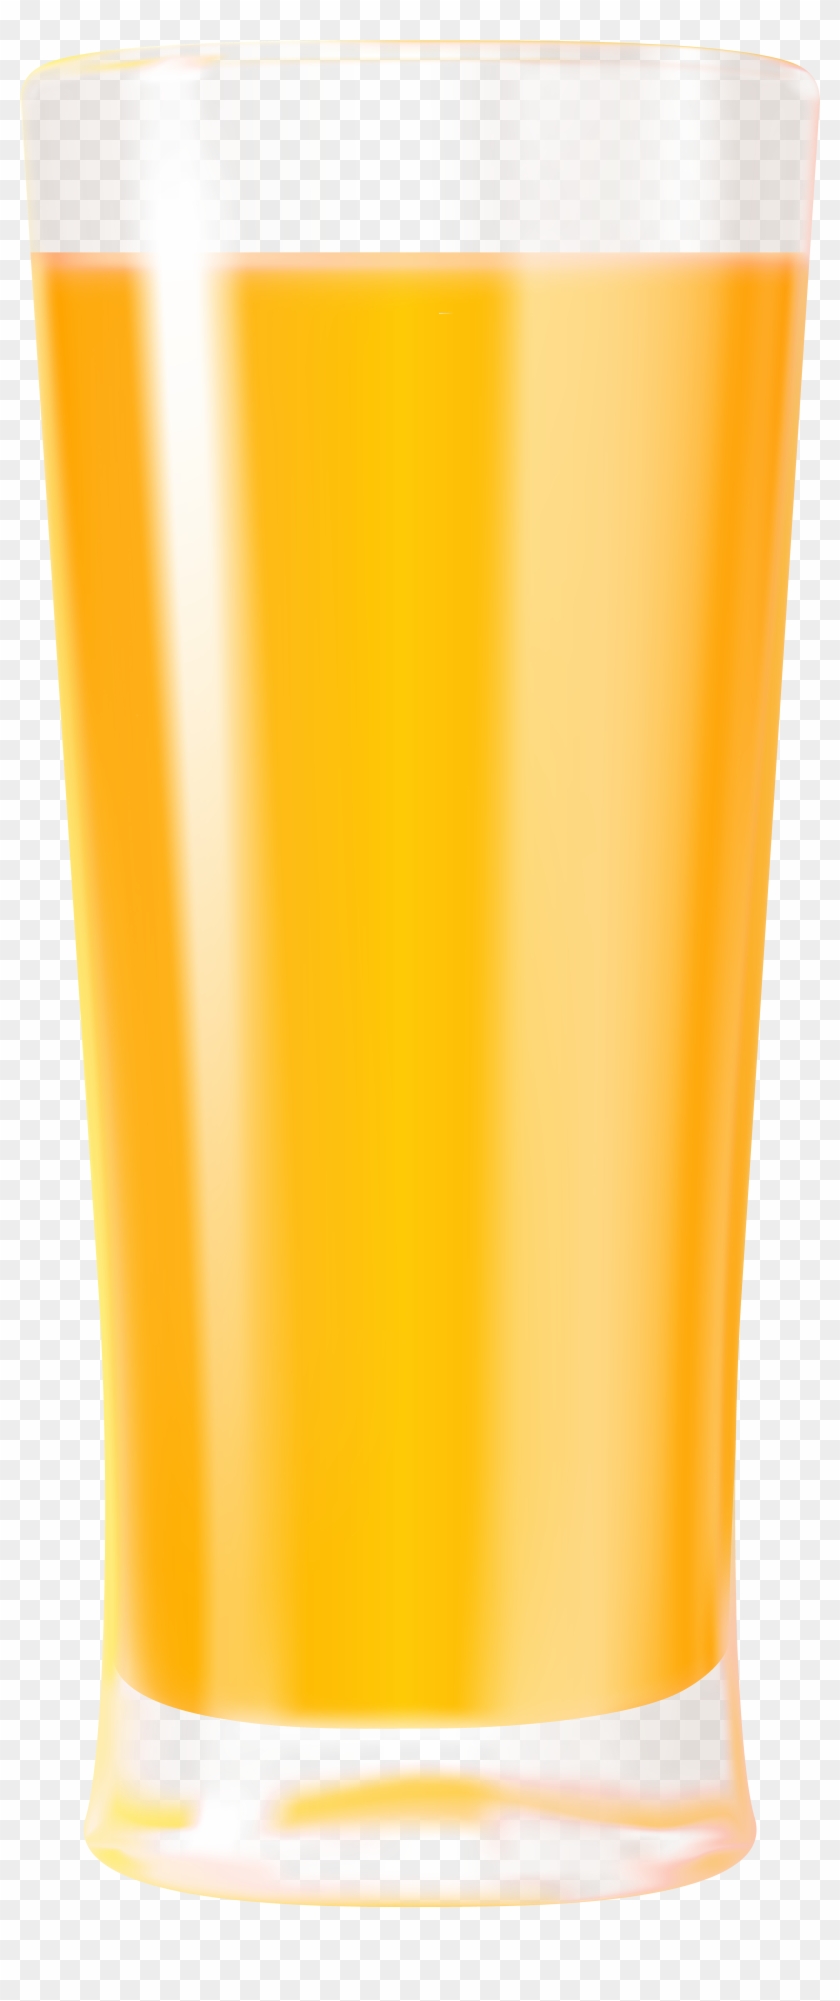 Glass With Orange Juice Png Clip Art Image - Beer Transparent Png #270196